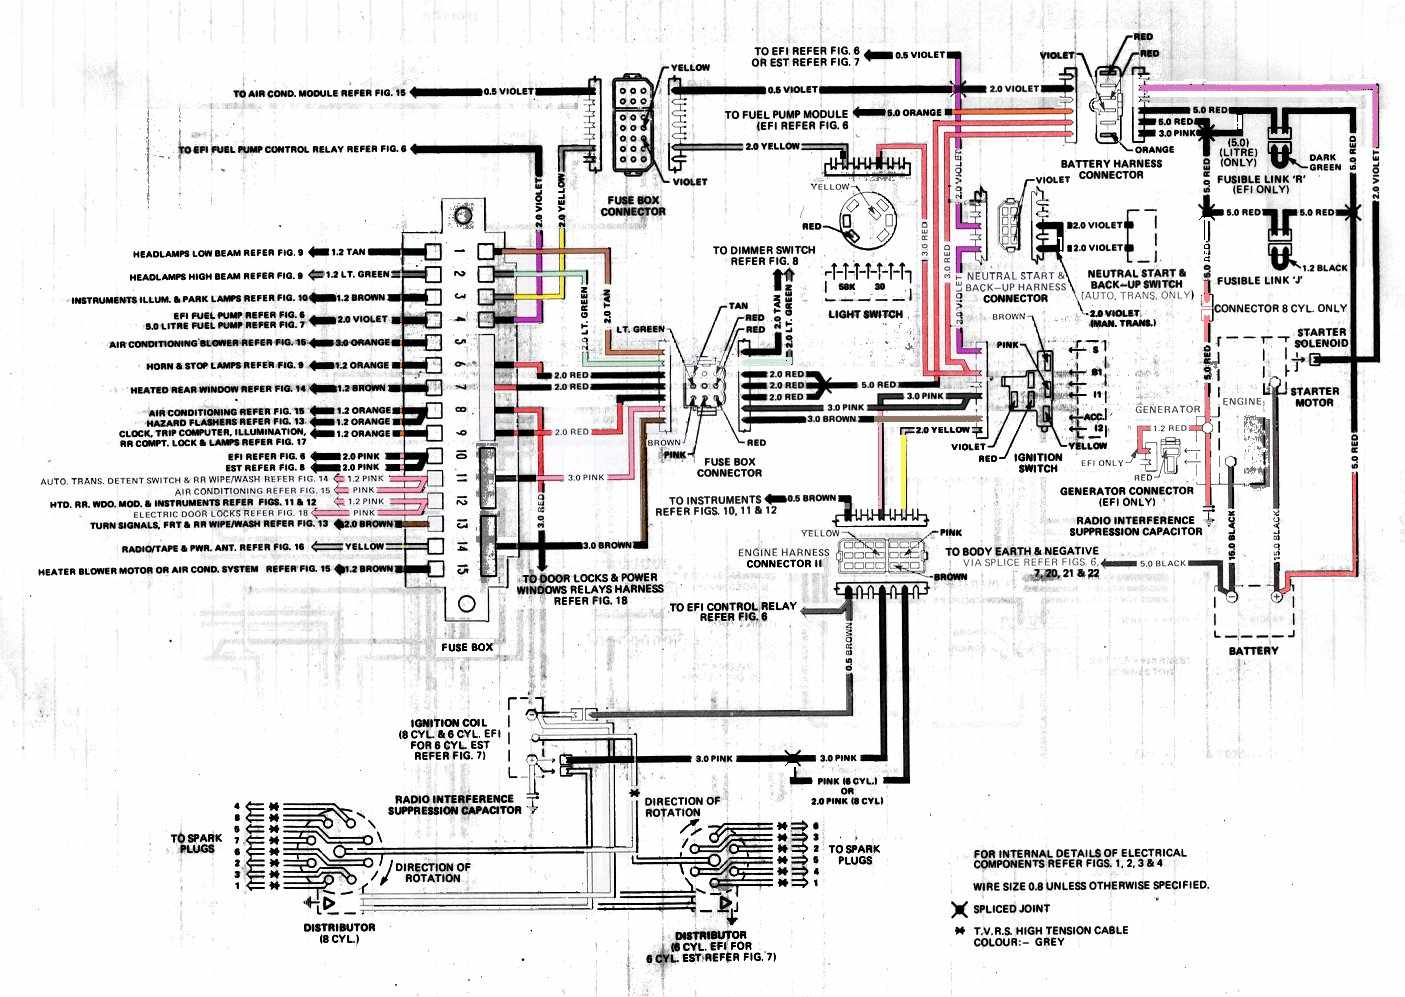 Circuit Diagram Maker Circuit Diagram Maker Mac Wiring Diagrams